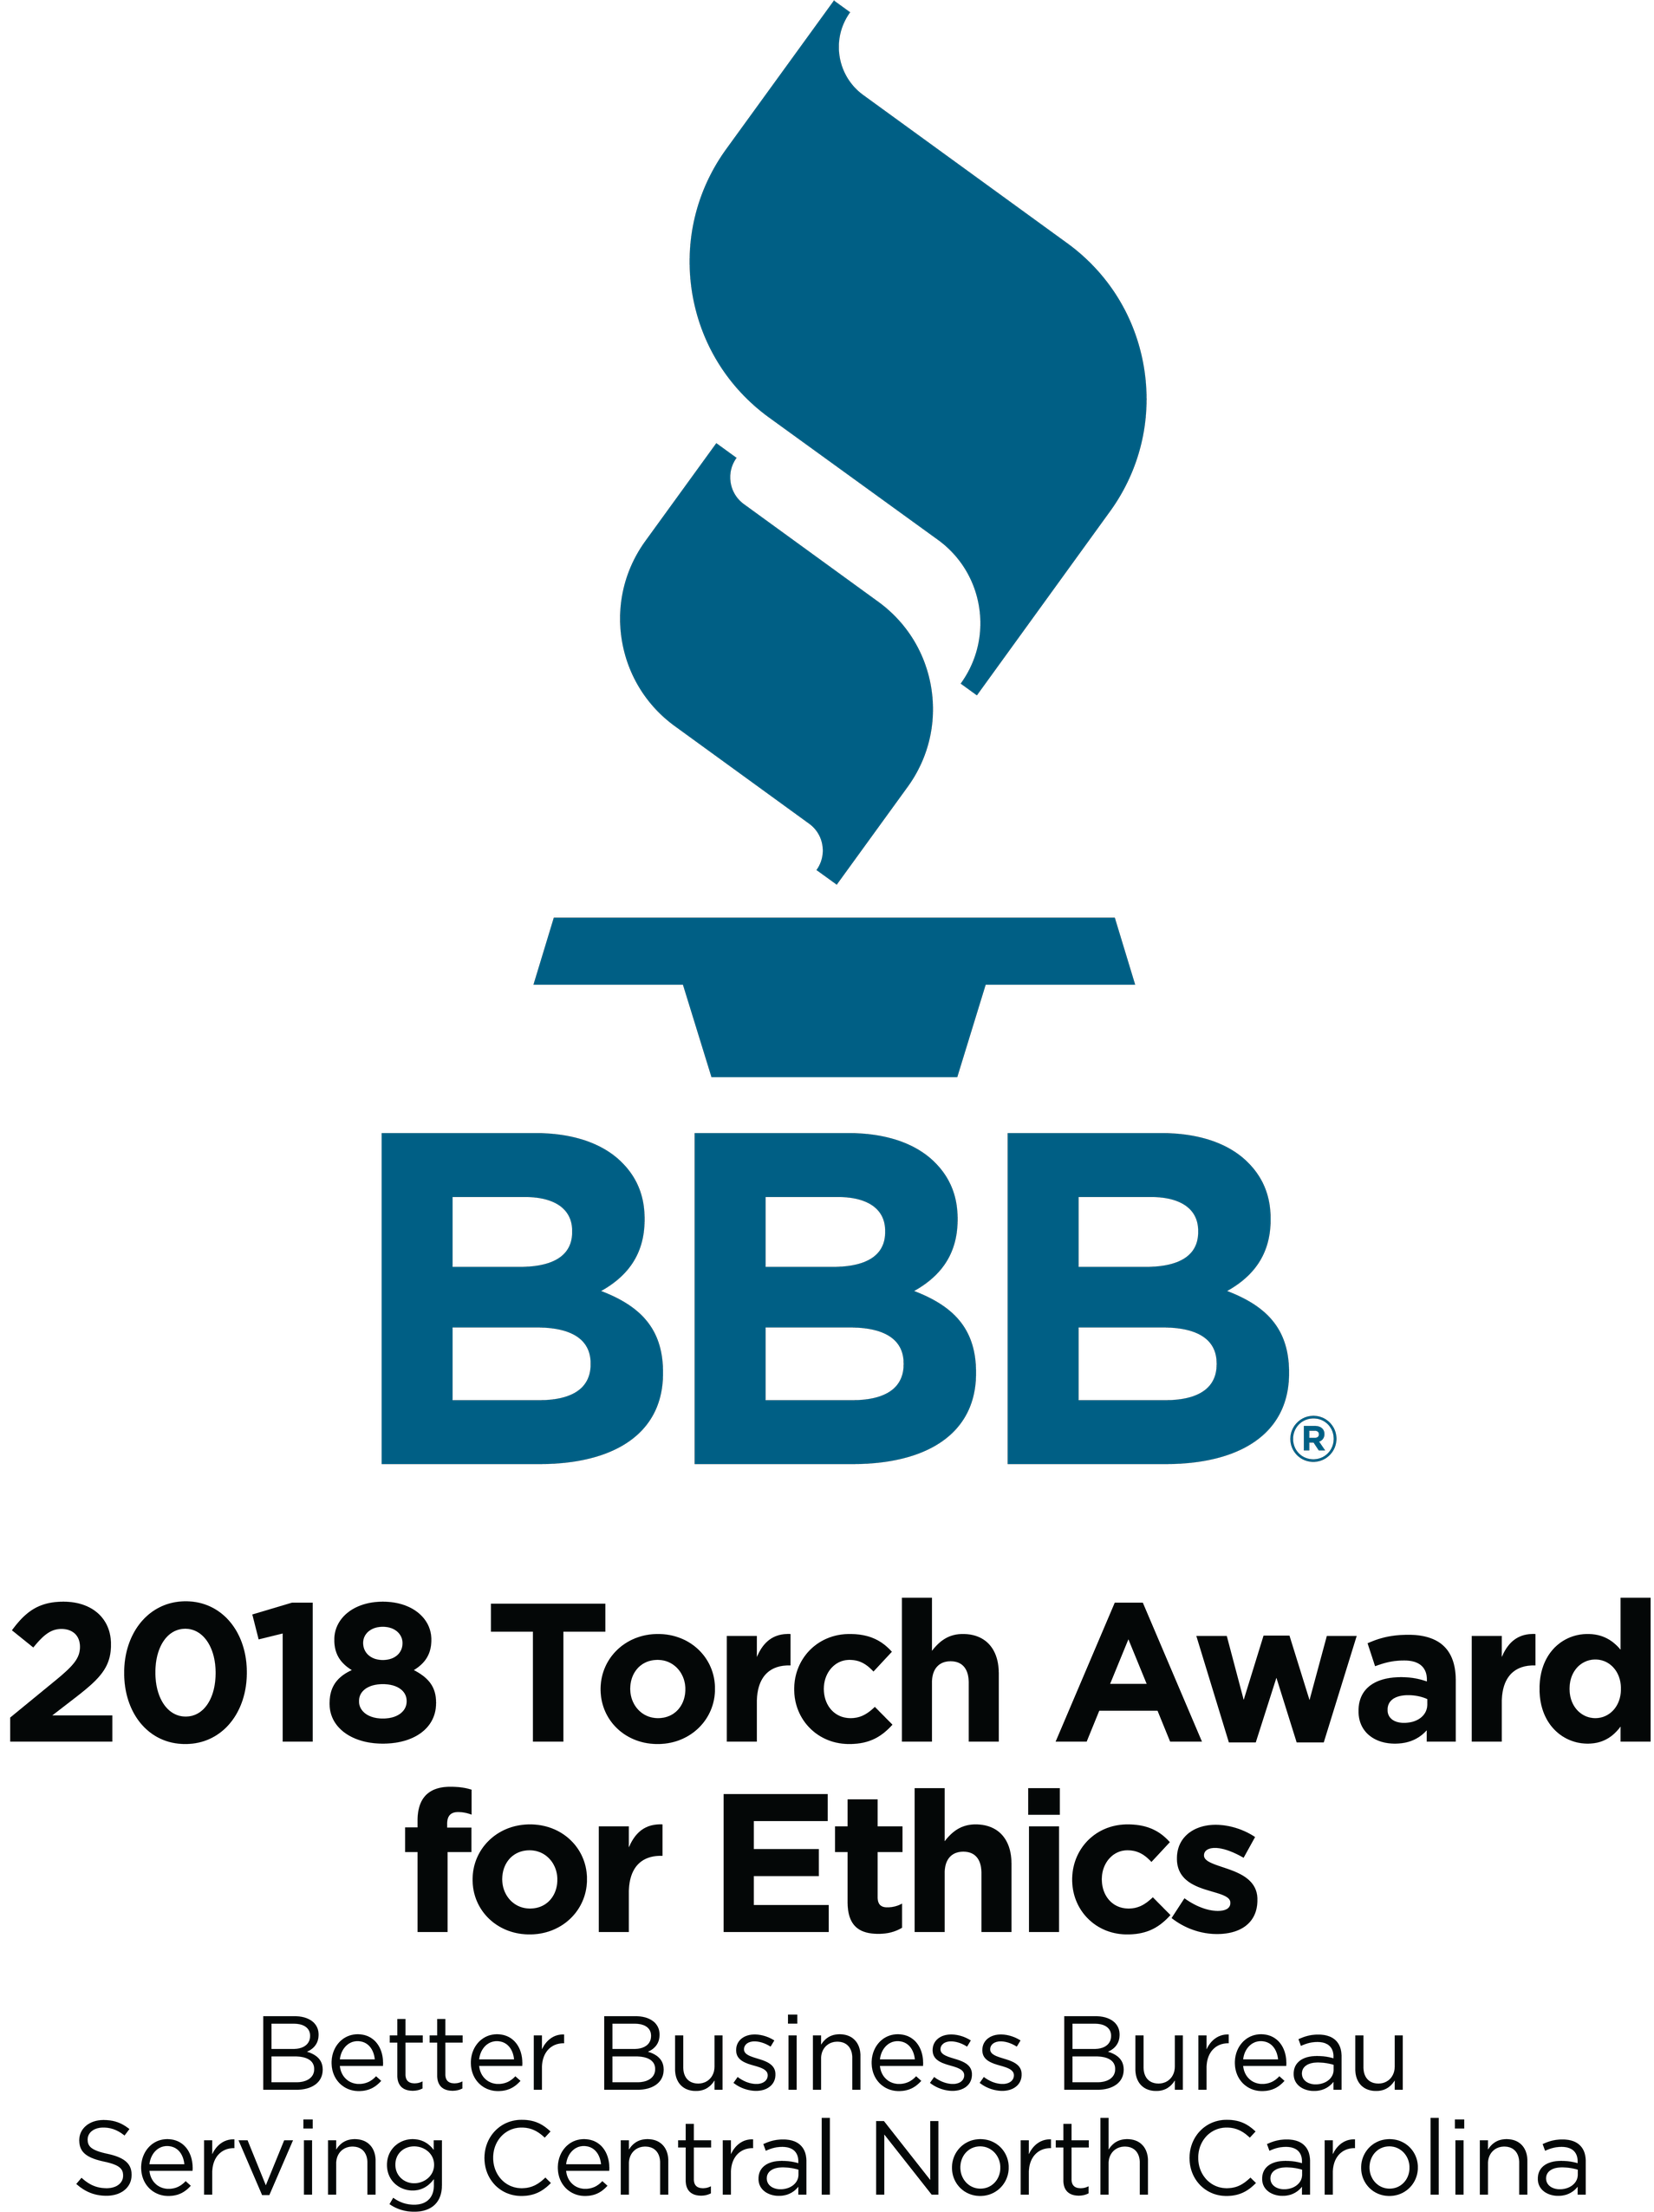 Market America | SHOP.COM Receives the Better Business Bureau’s 2013 & 2018 Torch Award for Marketplace Ethics